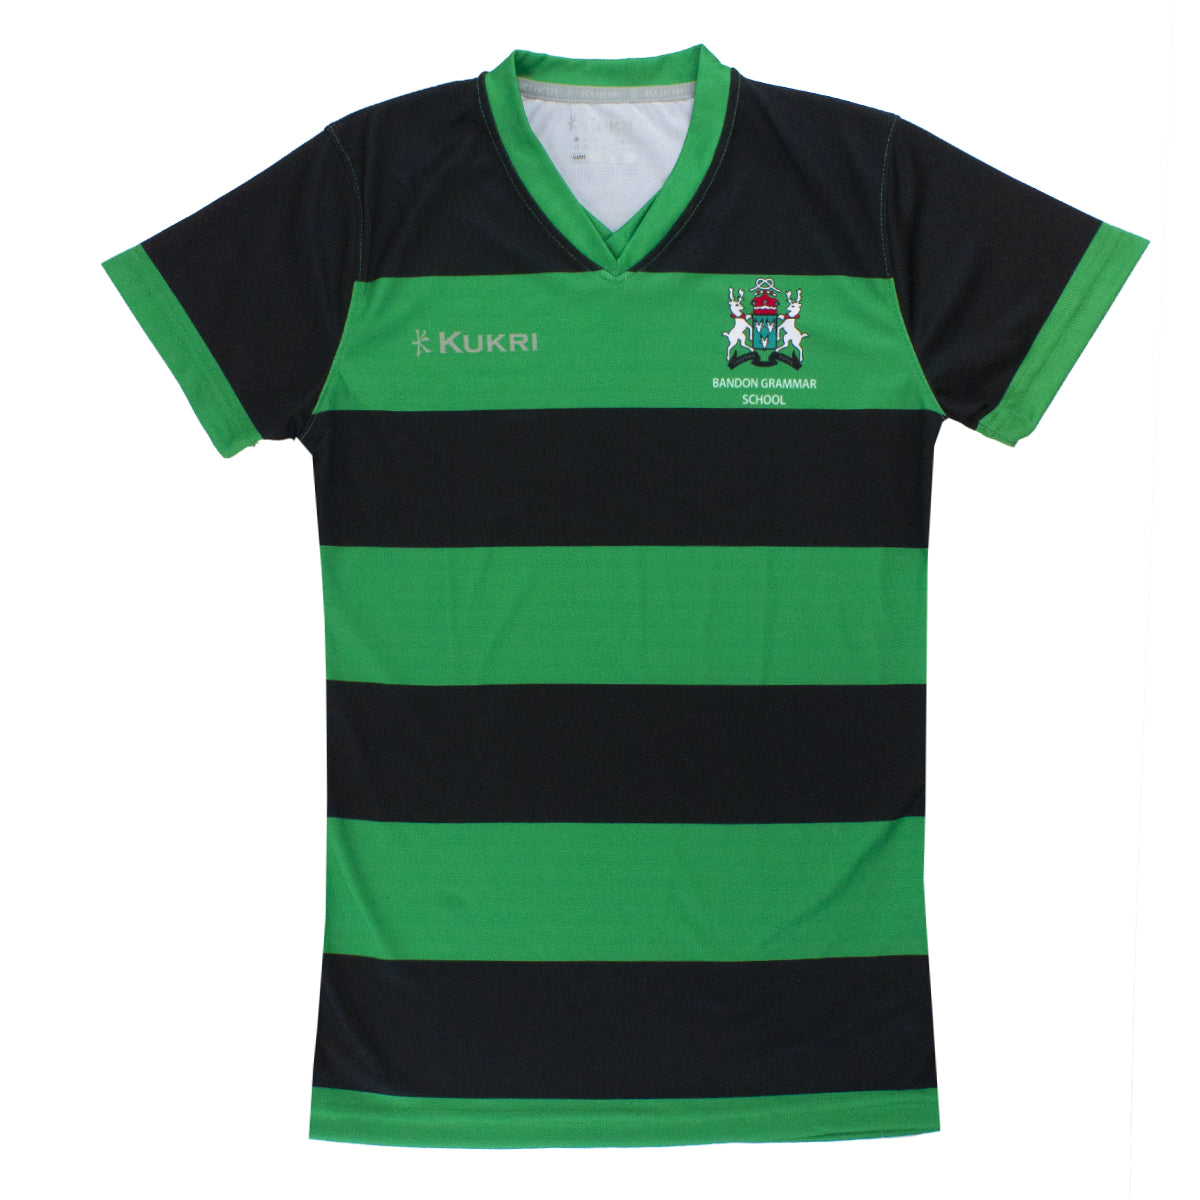 Bandon Grammar Girls PE/Hocey Shirt available from Uniformity